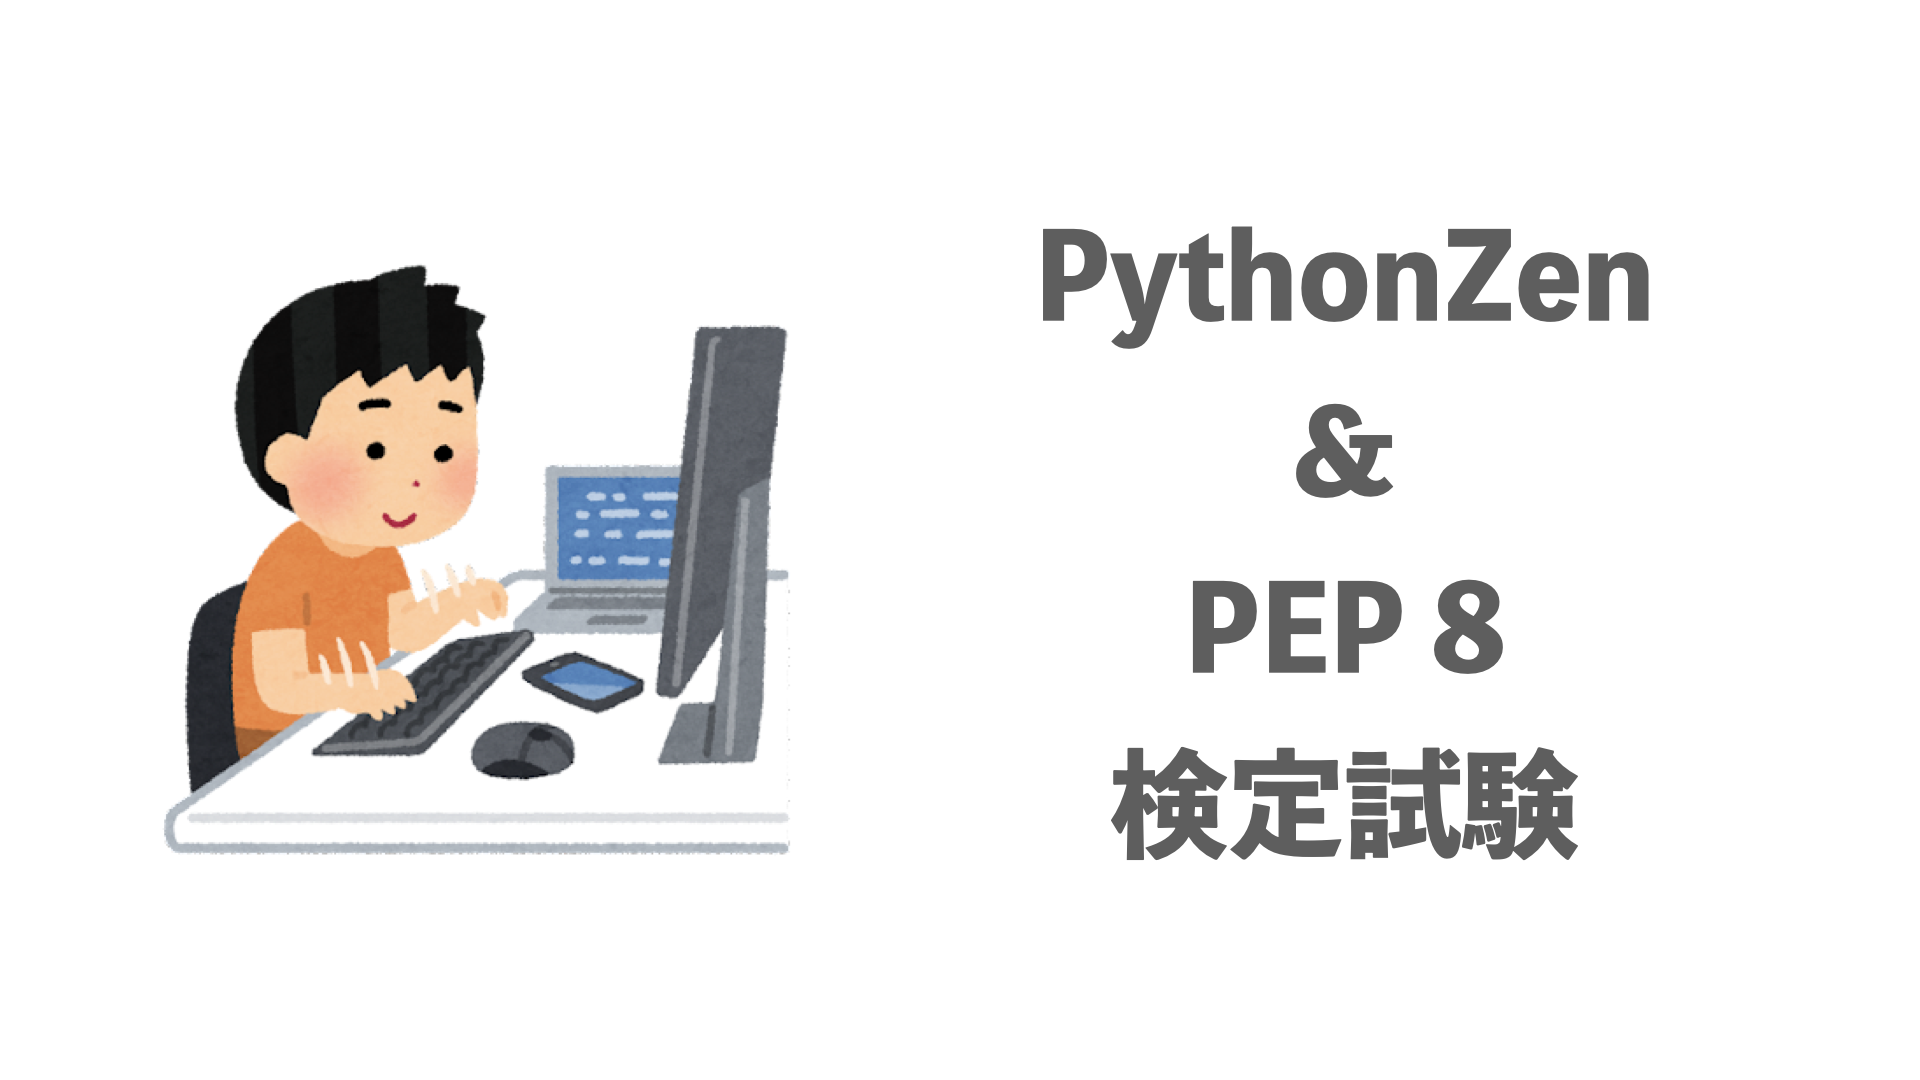 PythonZen & PEP 8 検定試験 体験記